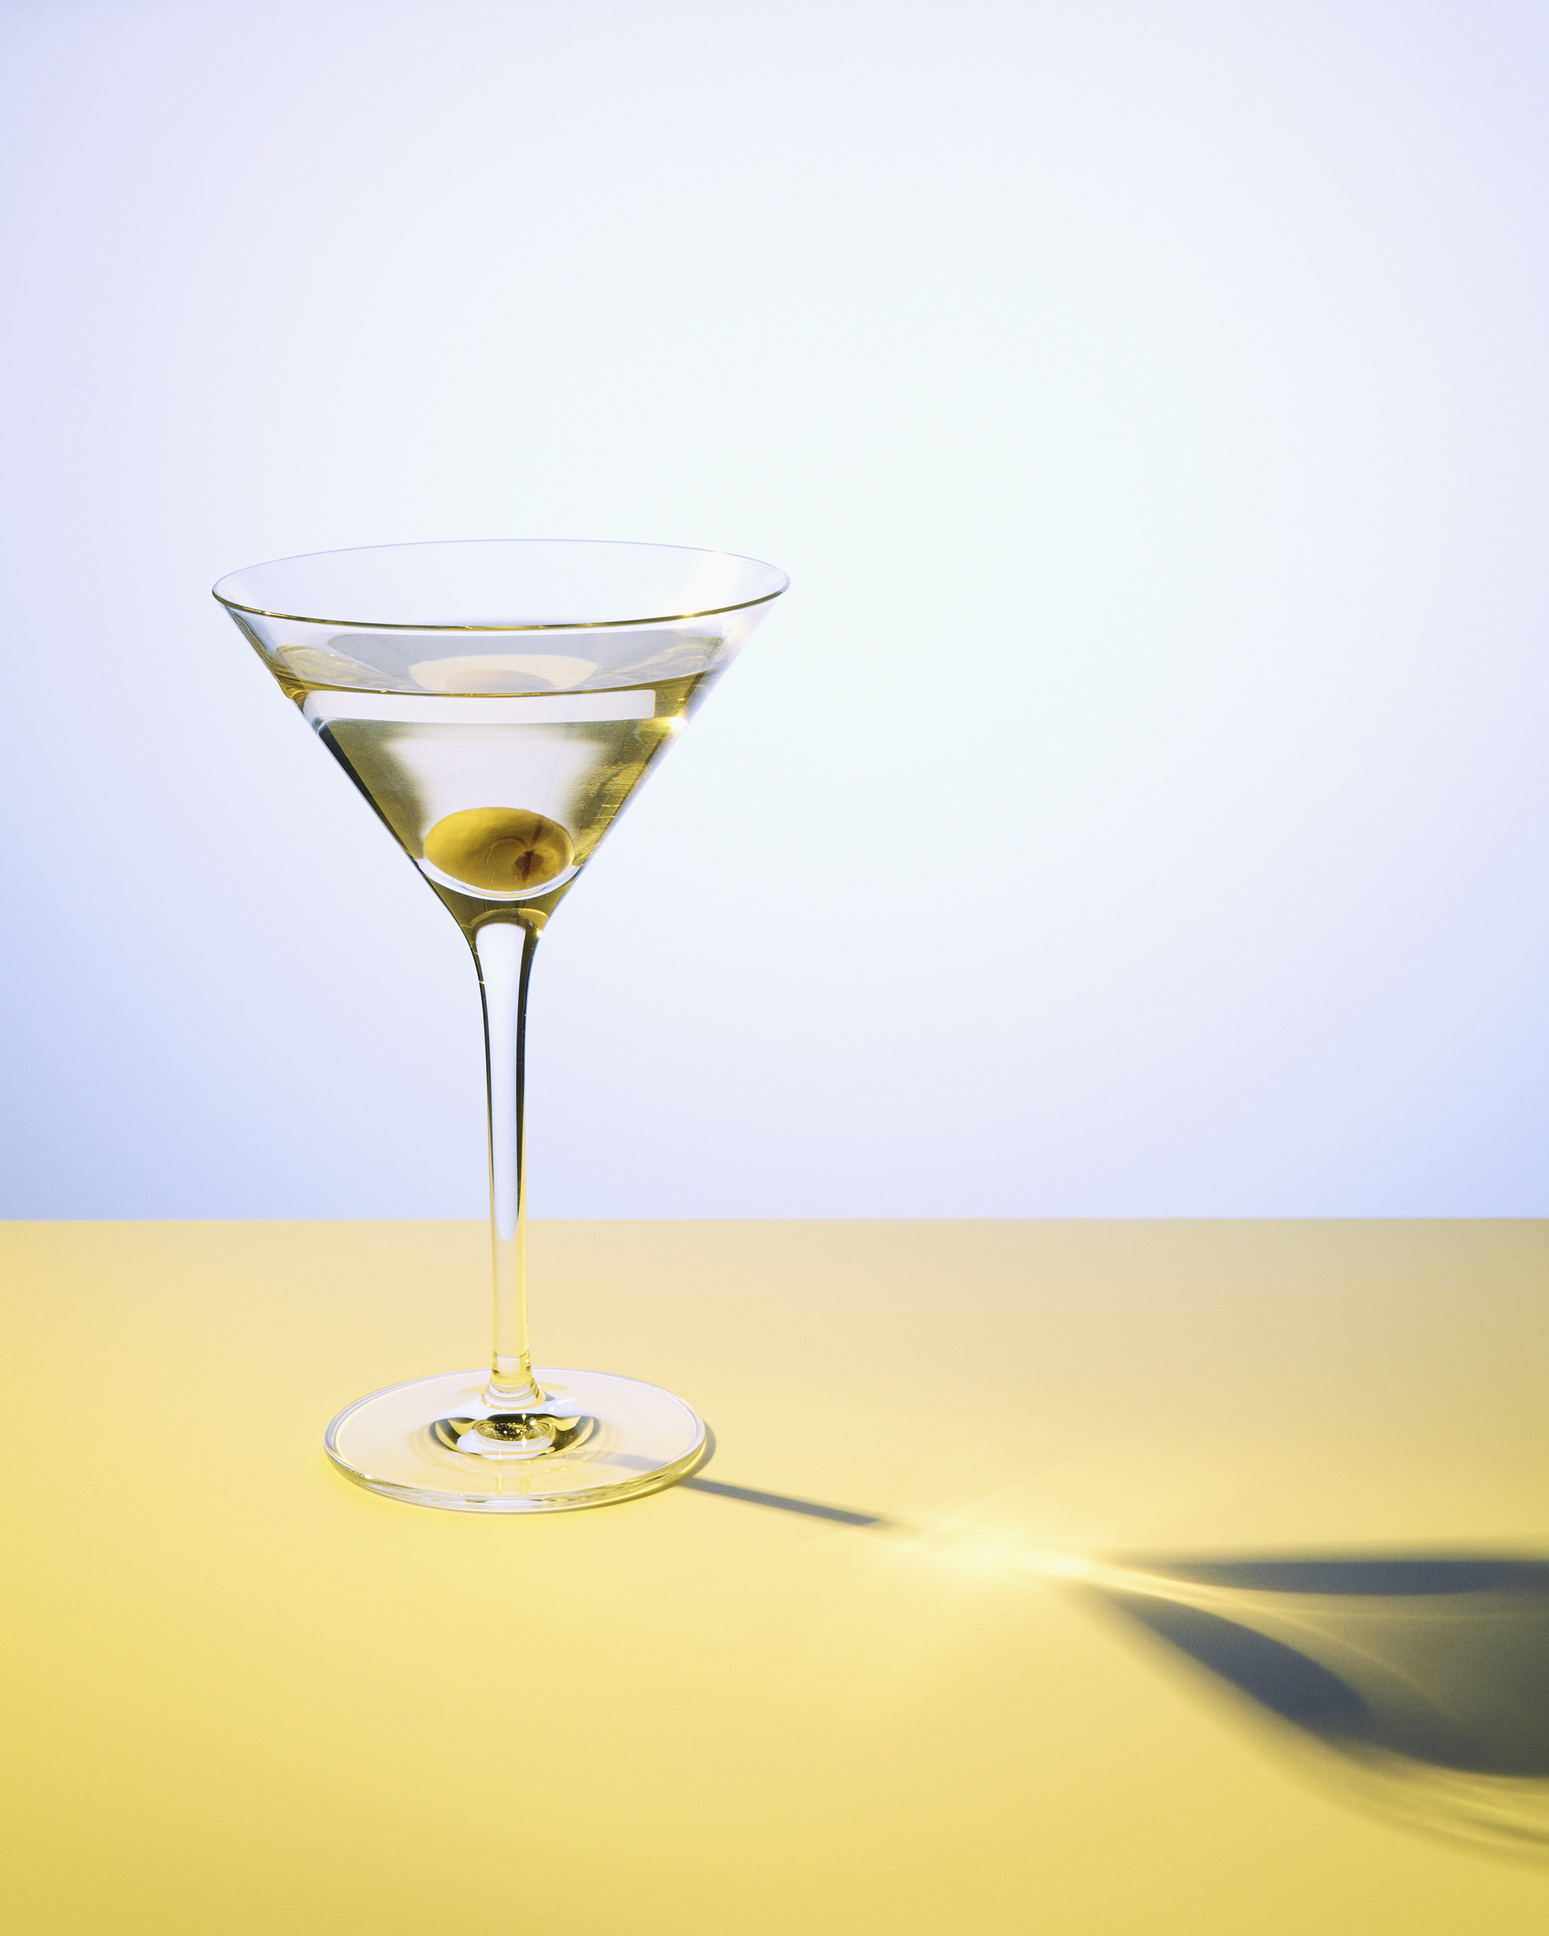 Martini in martini glass with olive